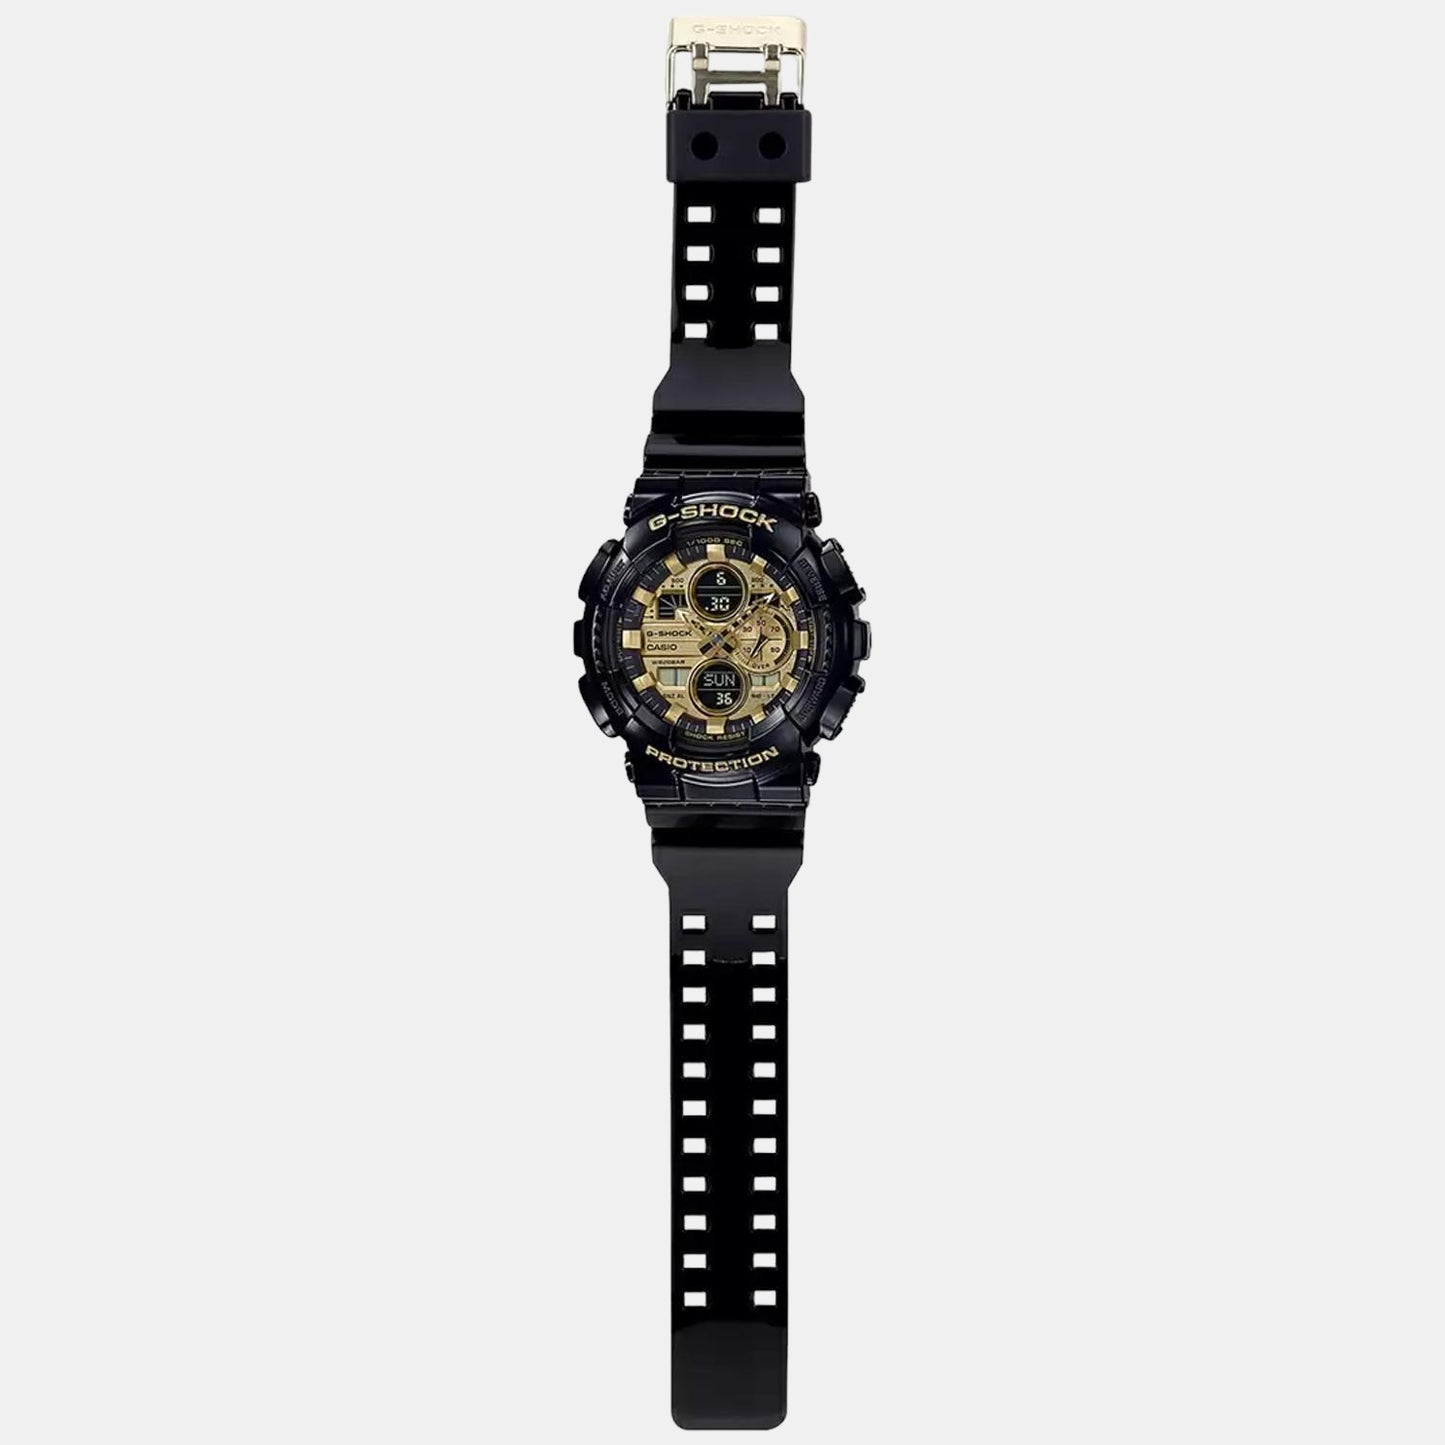 casio-resin-gold-analog-digital-mens-watch-g1021